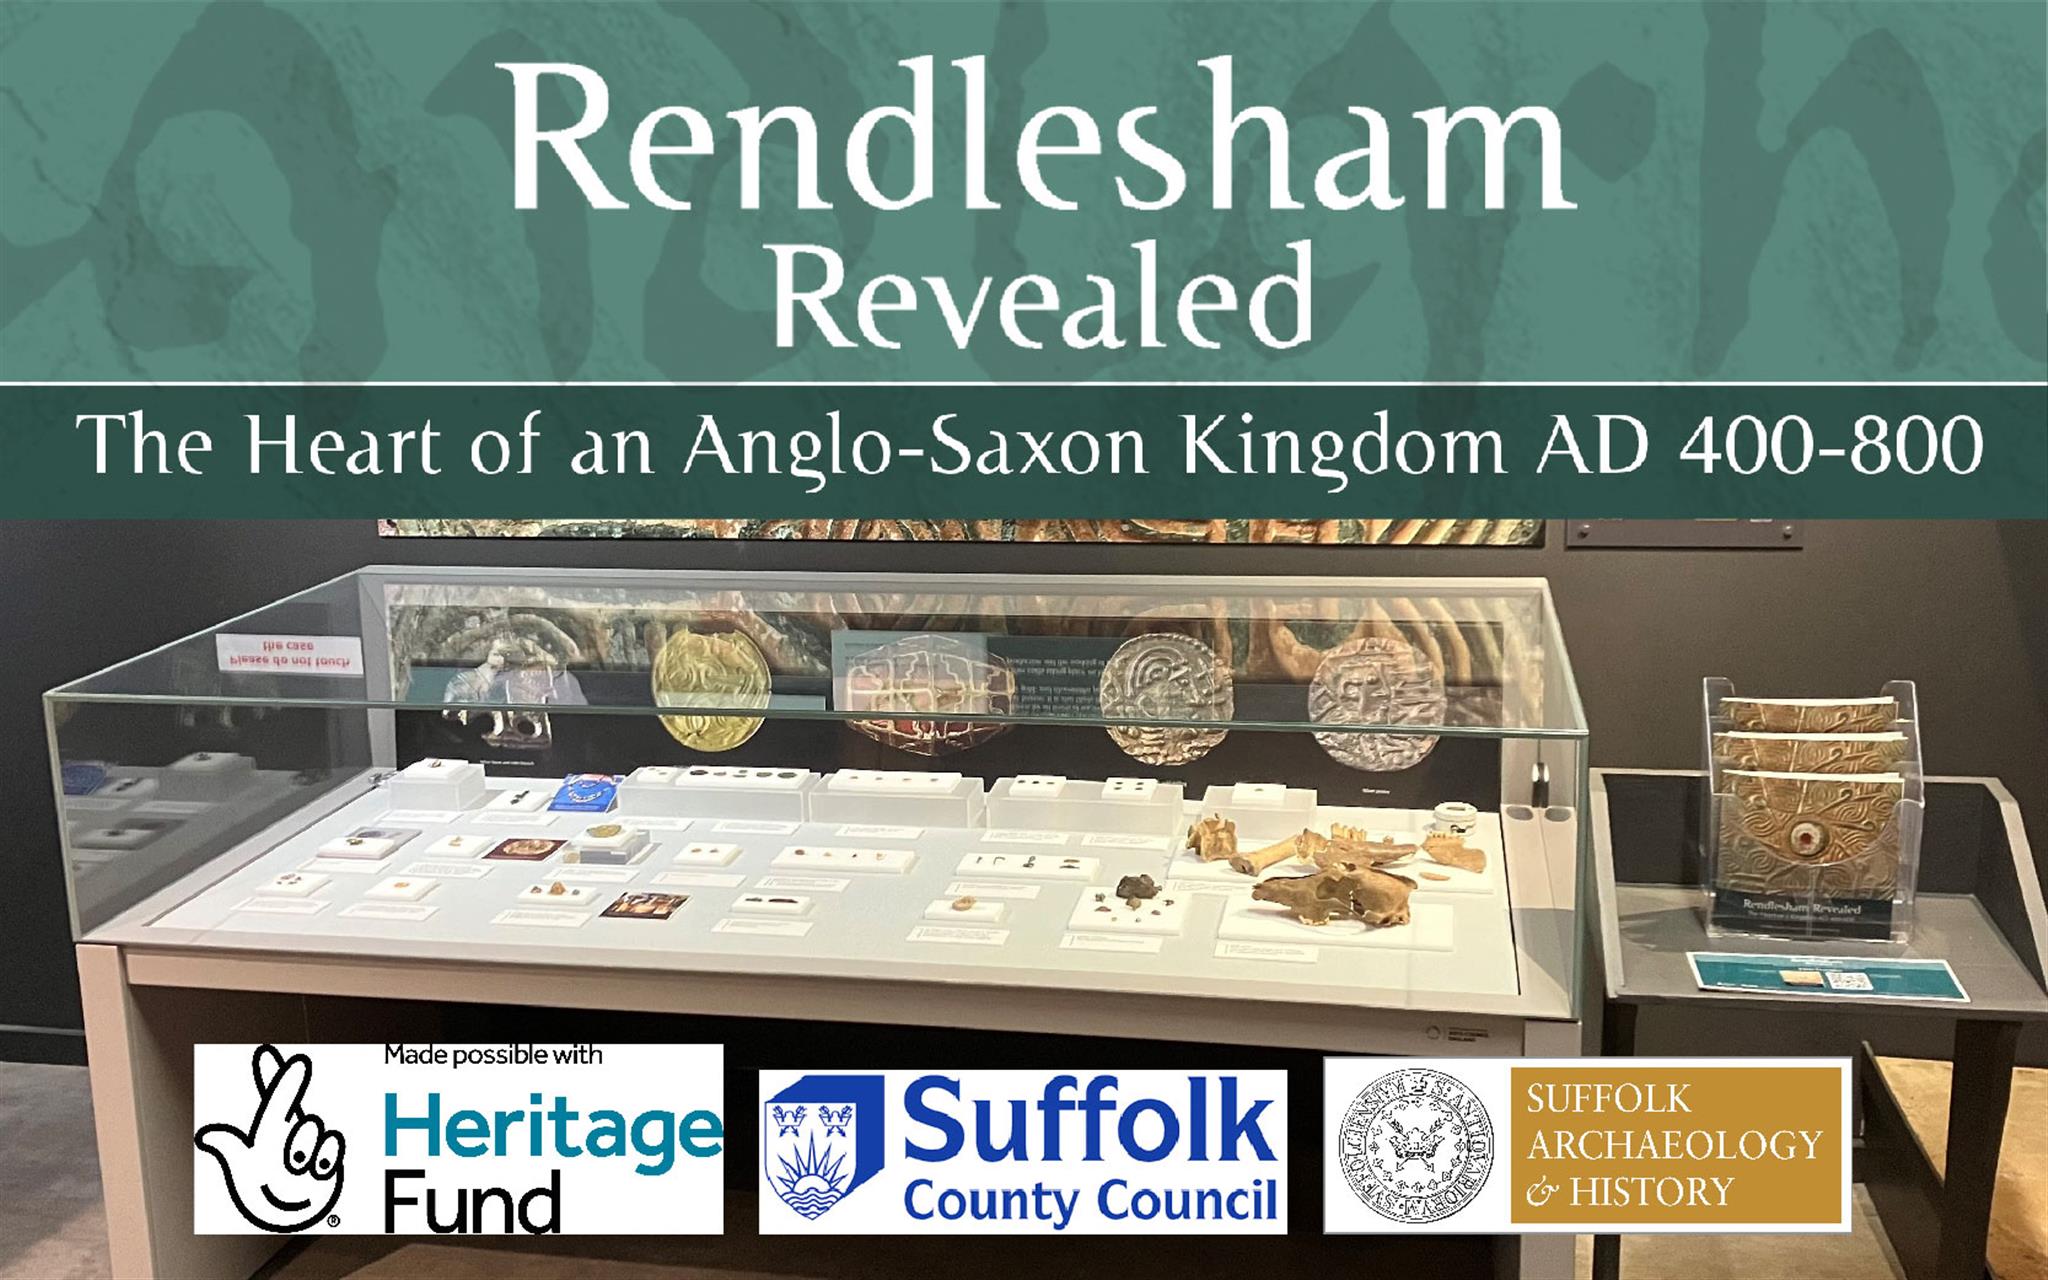 Rendlesham Revealed: The Heart of a Kingdom